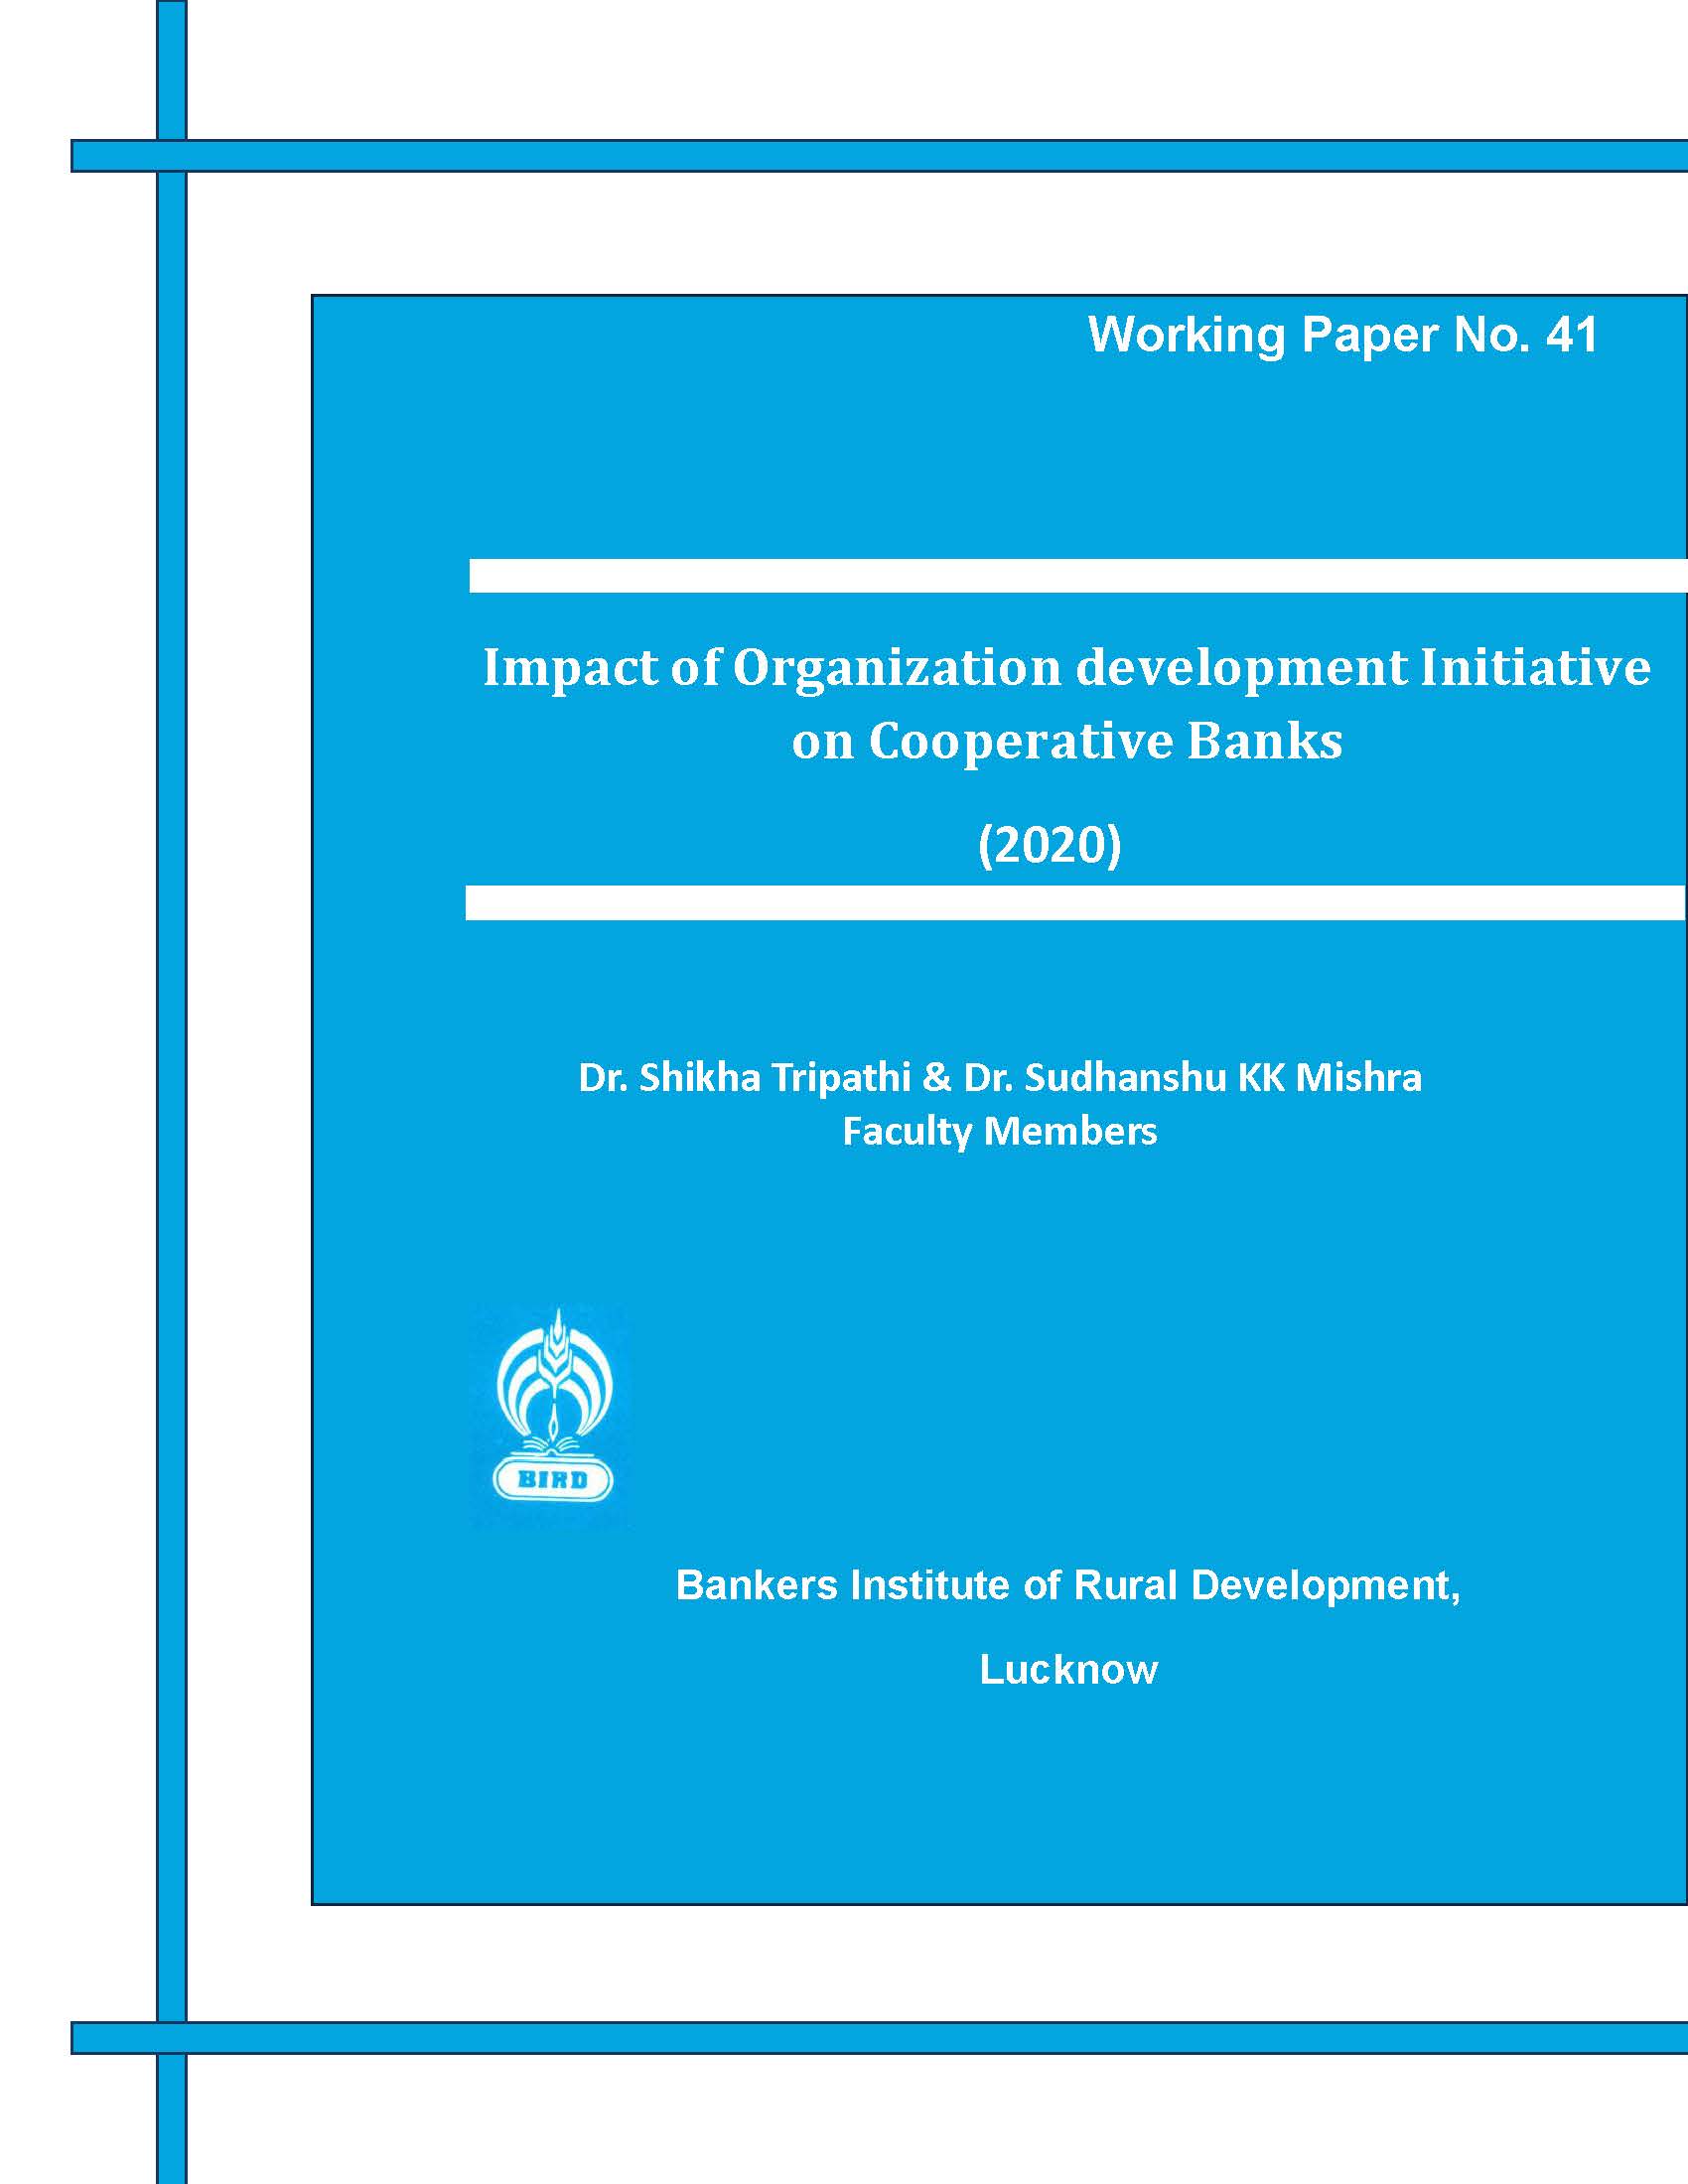 Impact of Organization development Initiative on Cooperative Banks